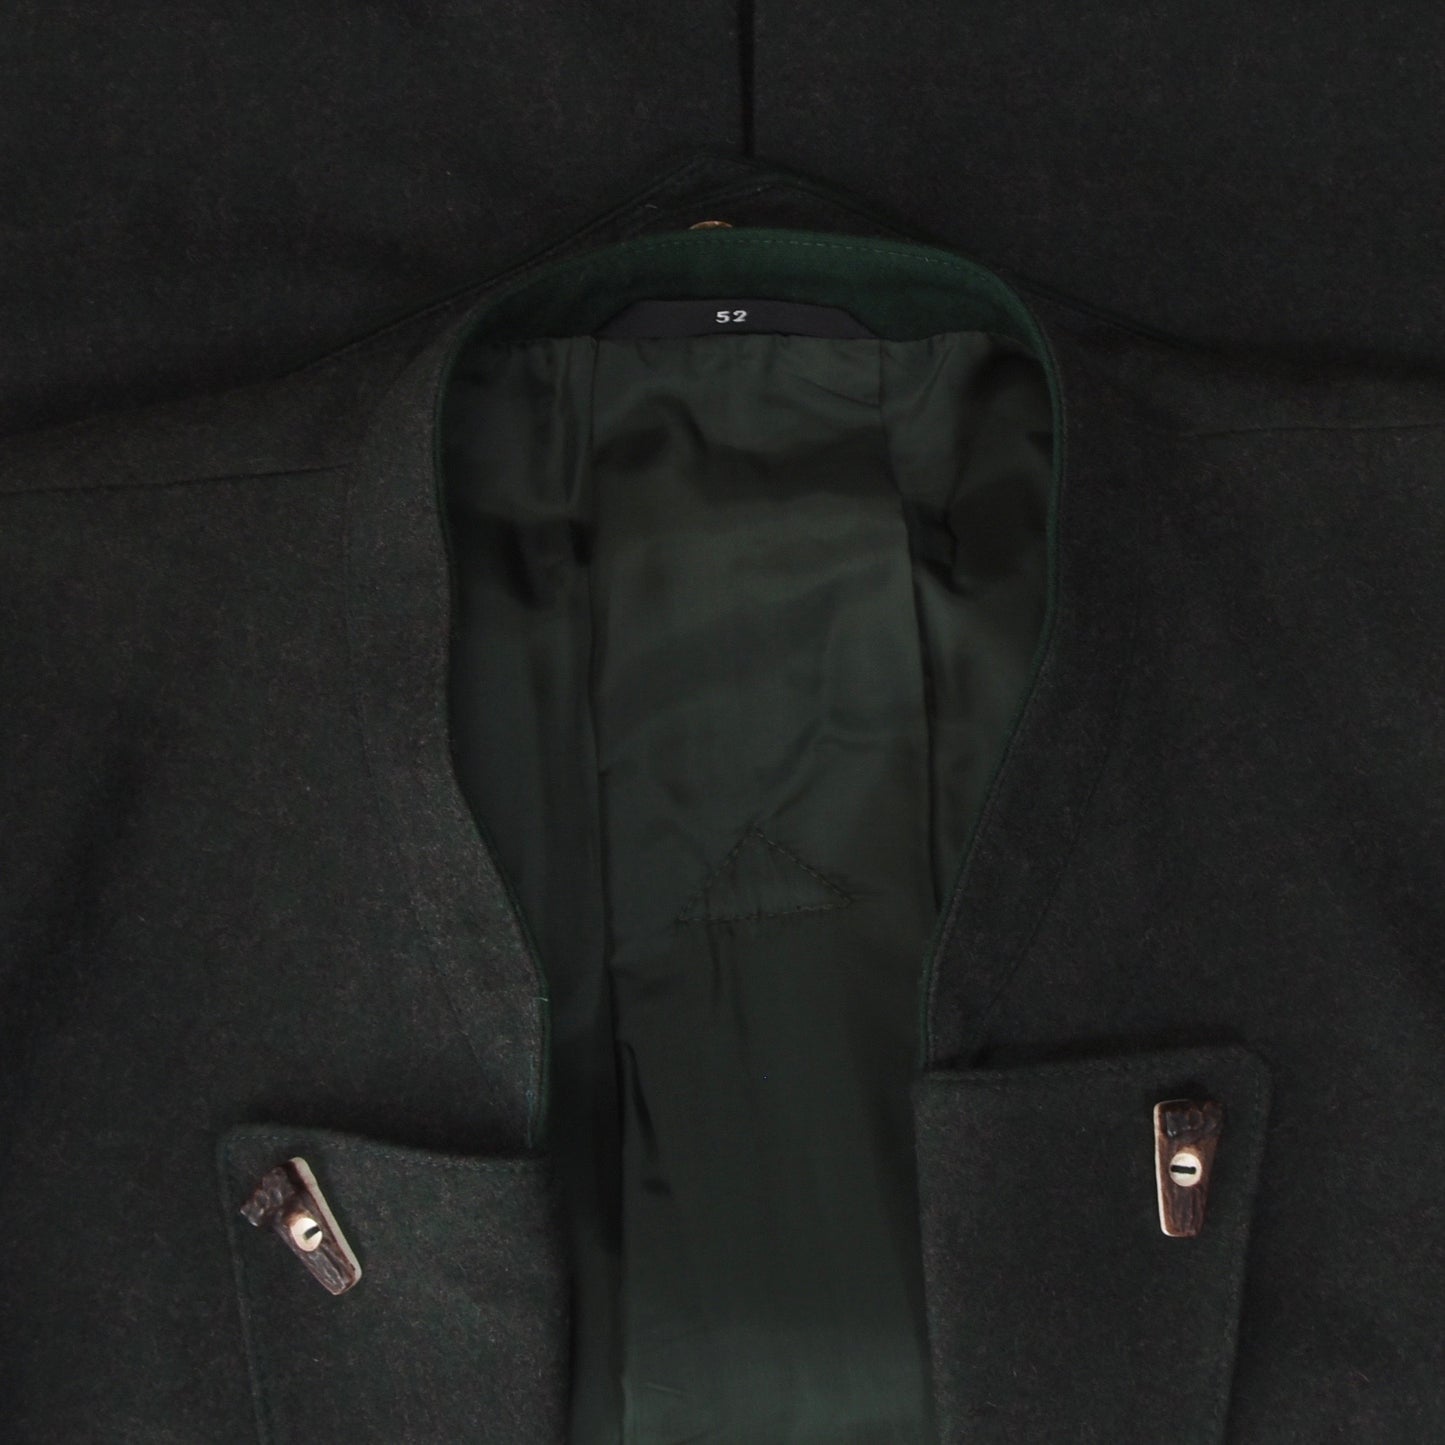 Traunsee Trachten Wool-Cashmere Janker/Jacket Size 52 - Green/Grey Plaid